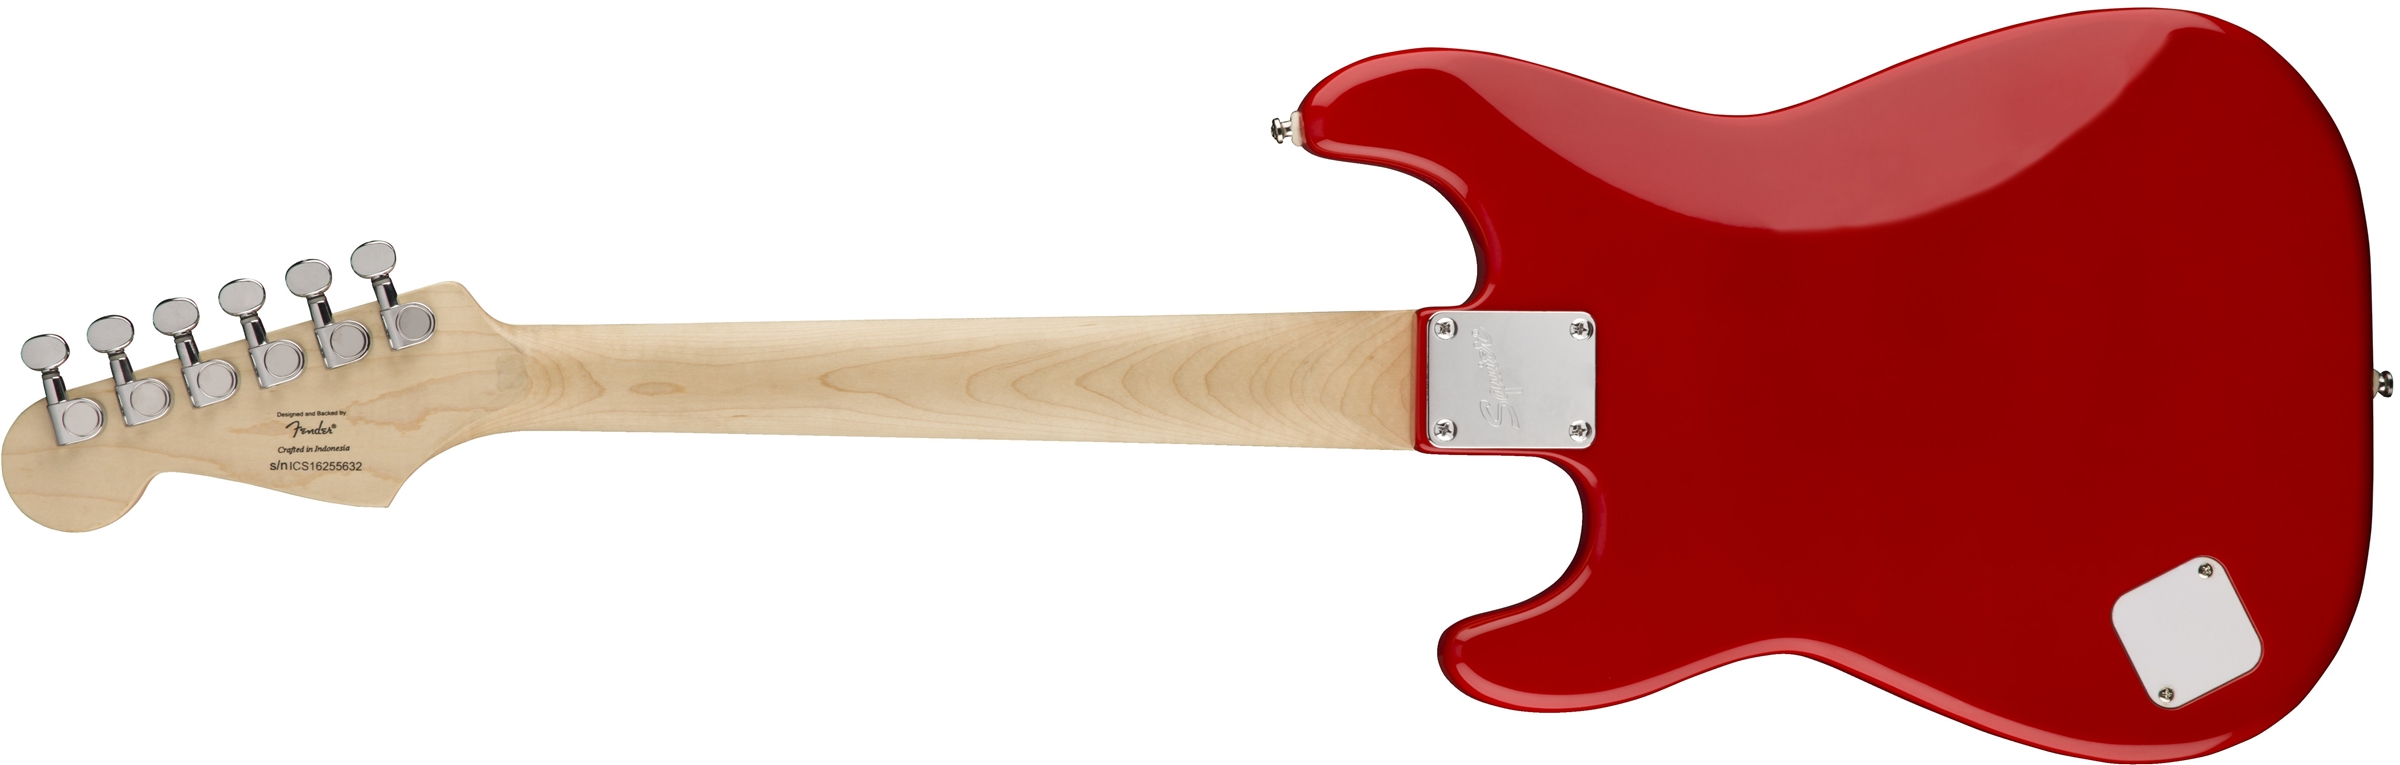 Squier Strat Mini V2 Sss Ht Rw - Torino Red - Guitarra eléctrica para niños - Variation 1